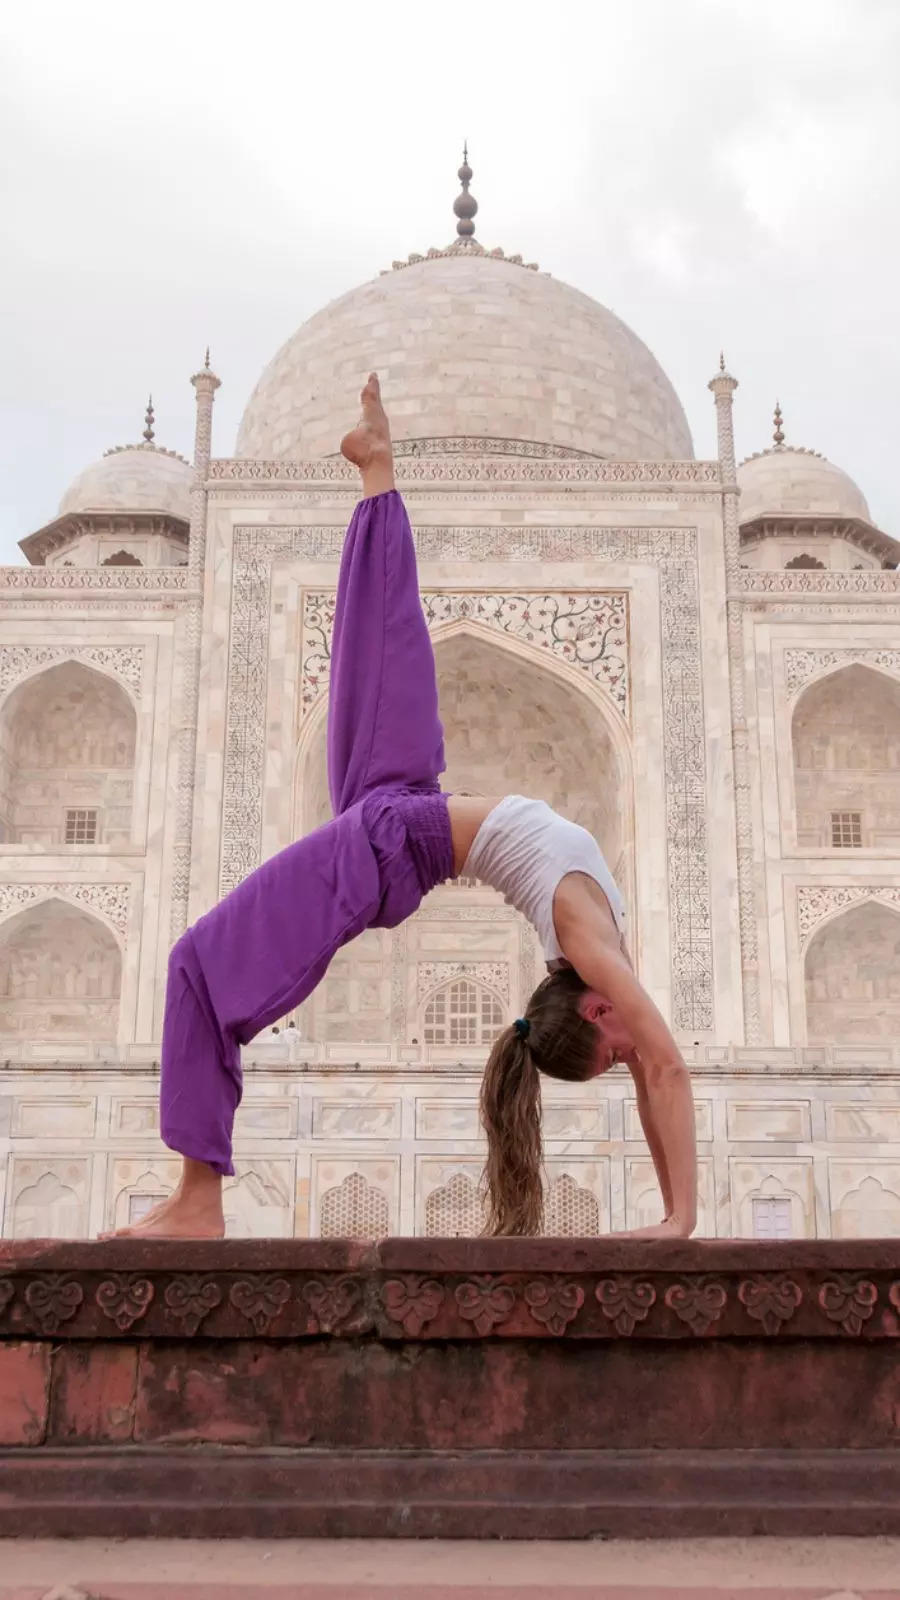 8 yoga asanas for beginners on International Yoga Day